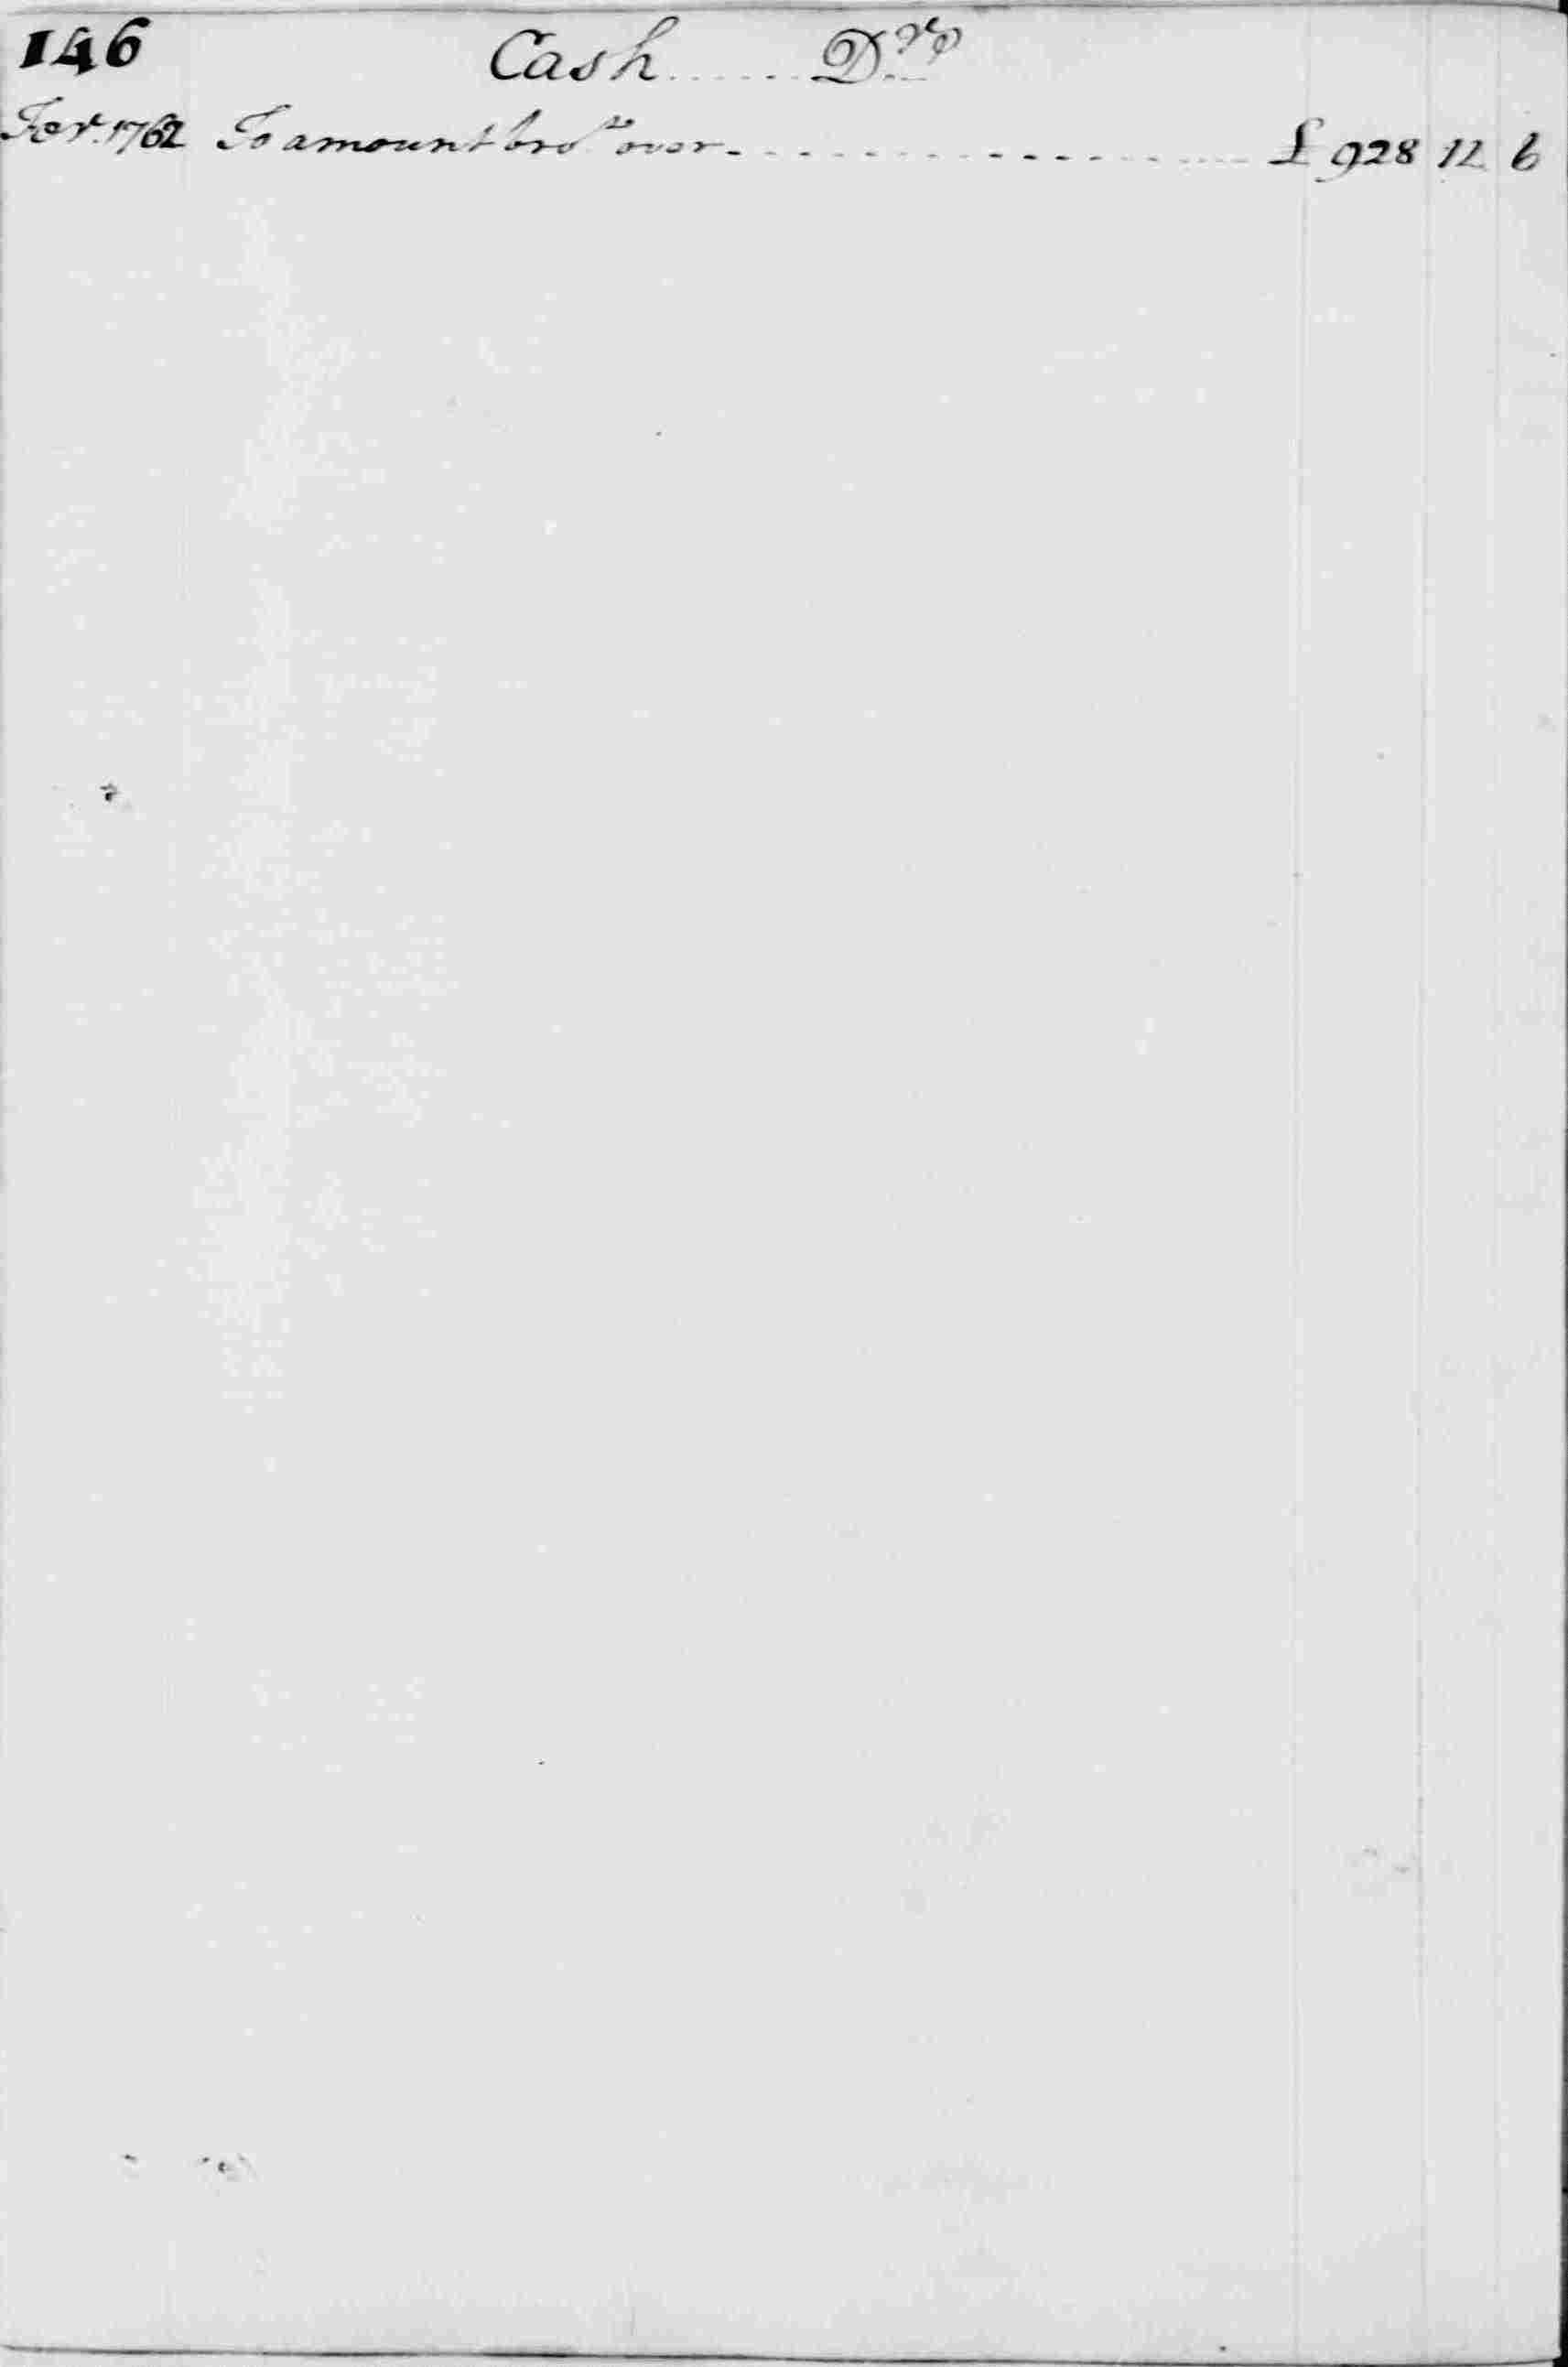 Ledger A, folio 146, left side